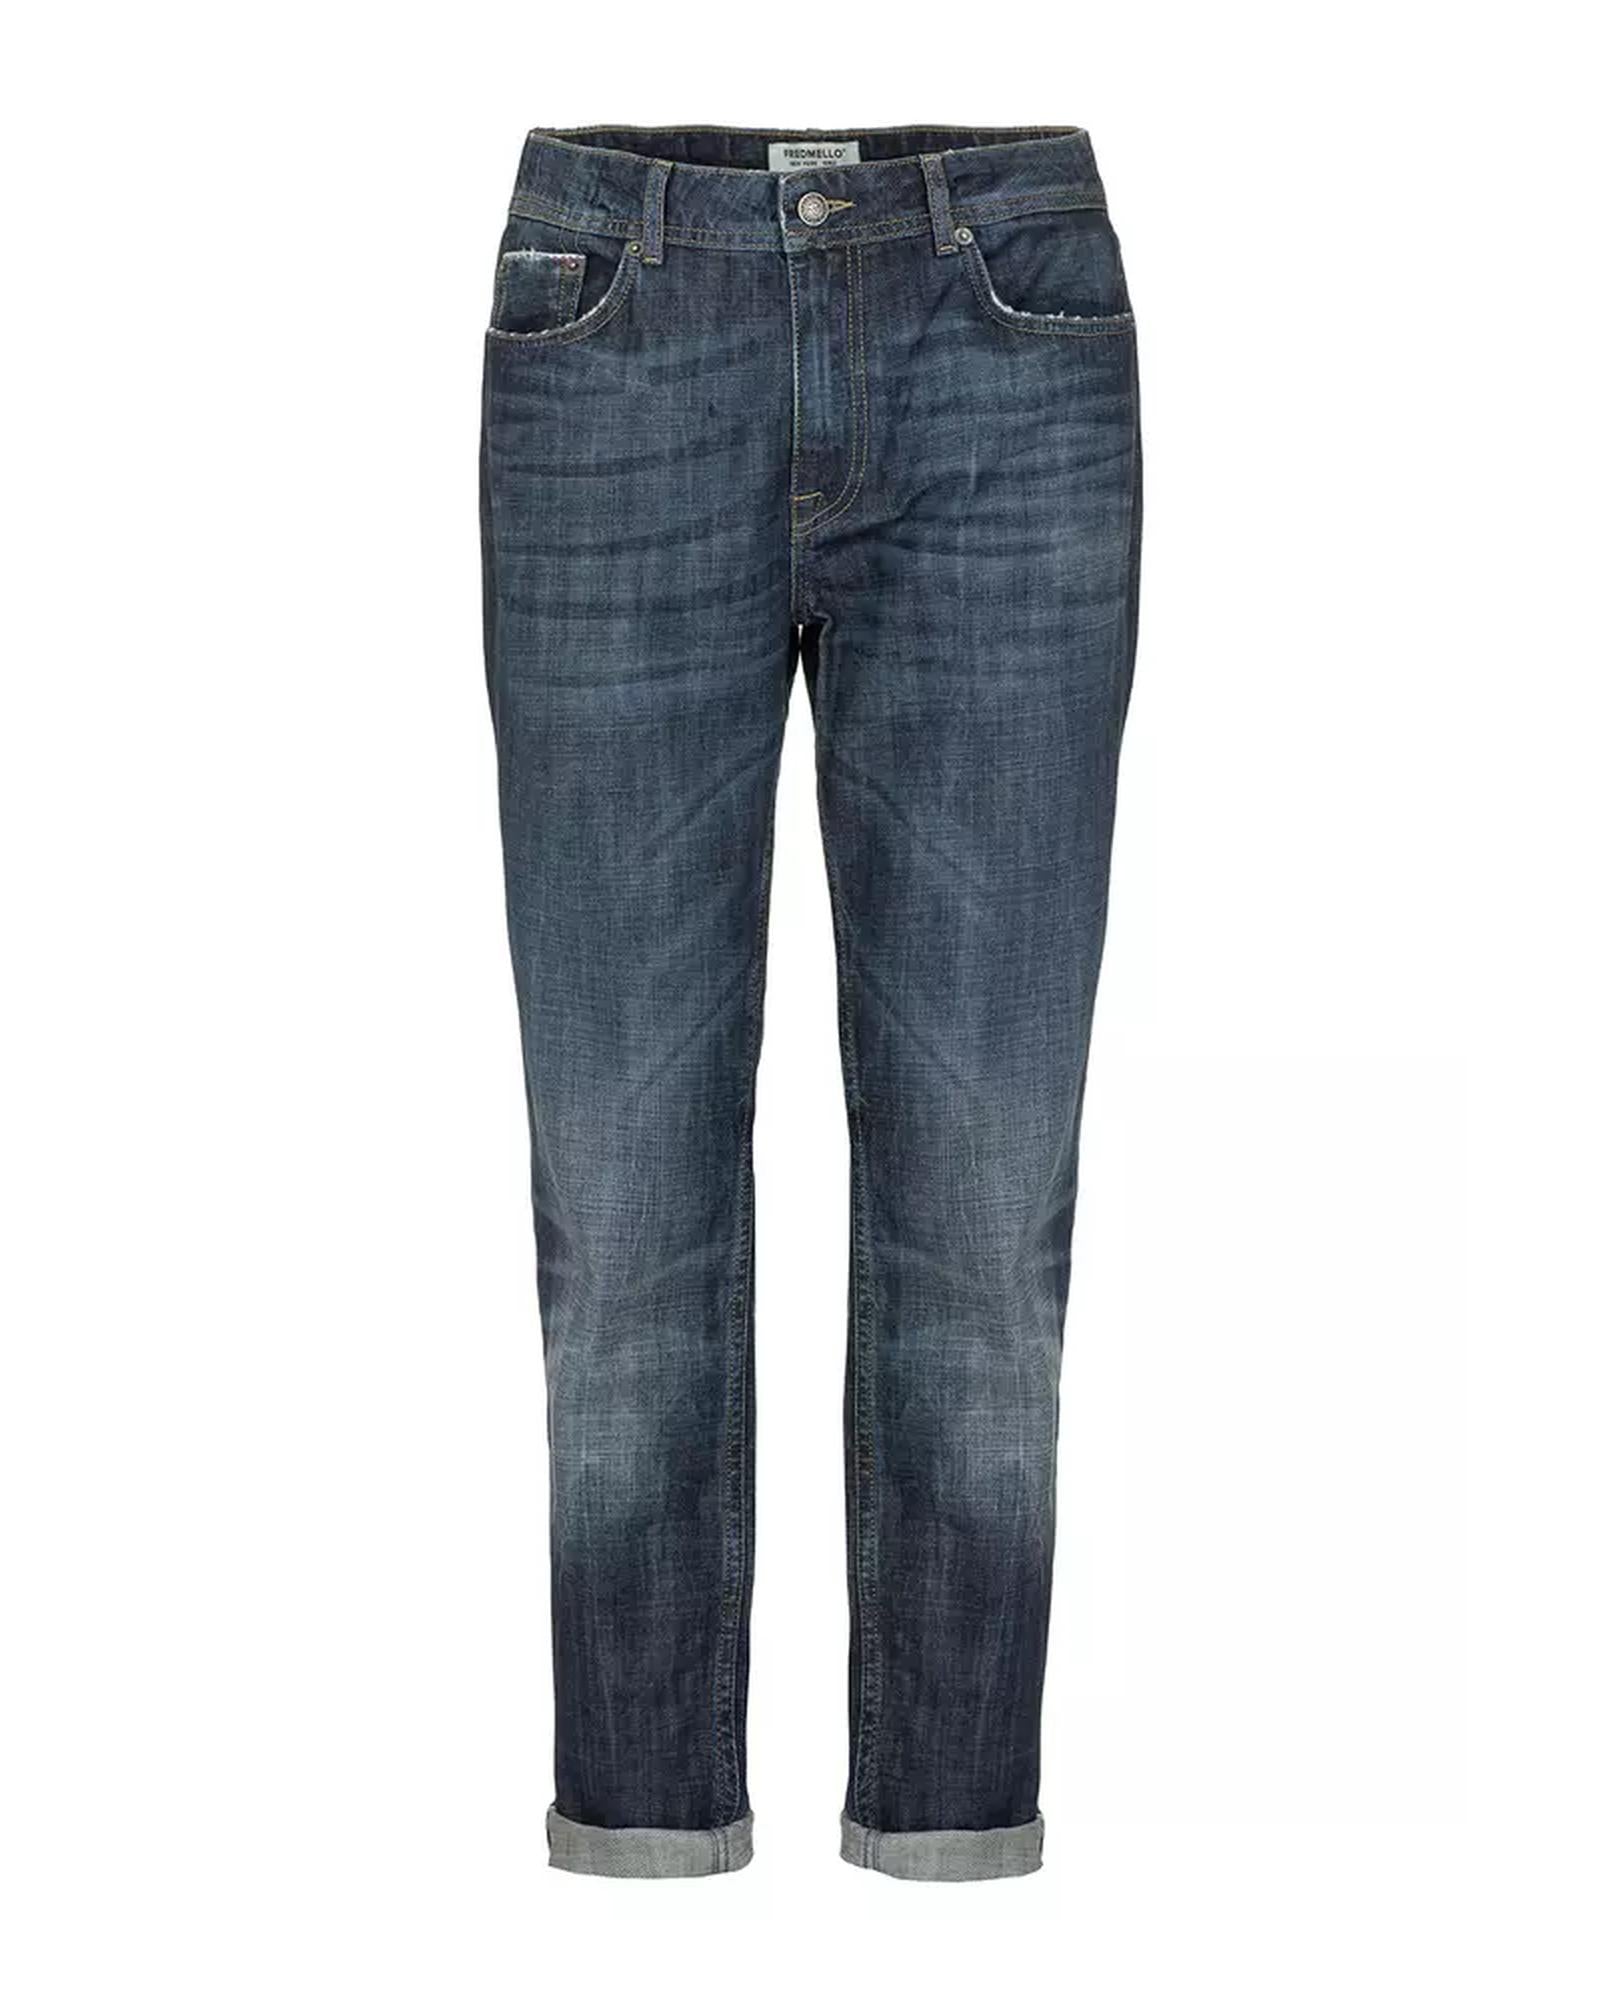 Five-Pocket Cotton Jeans with Zipper and Button Closure W34 US Men